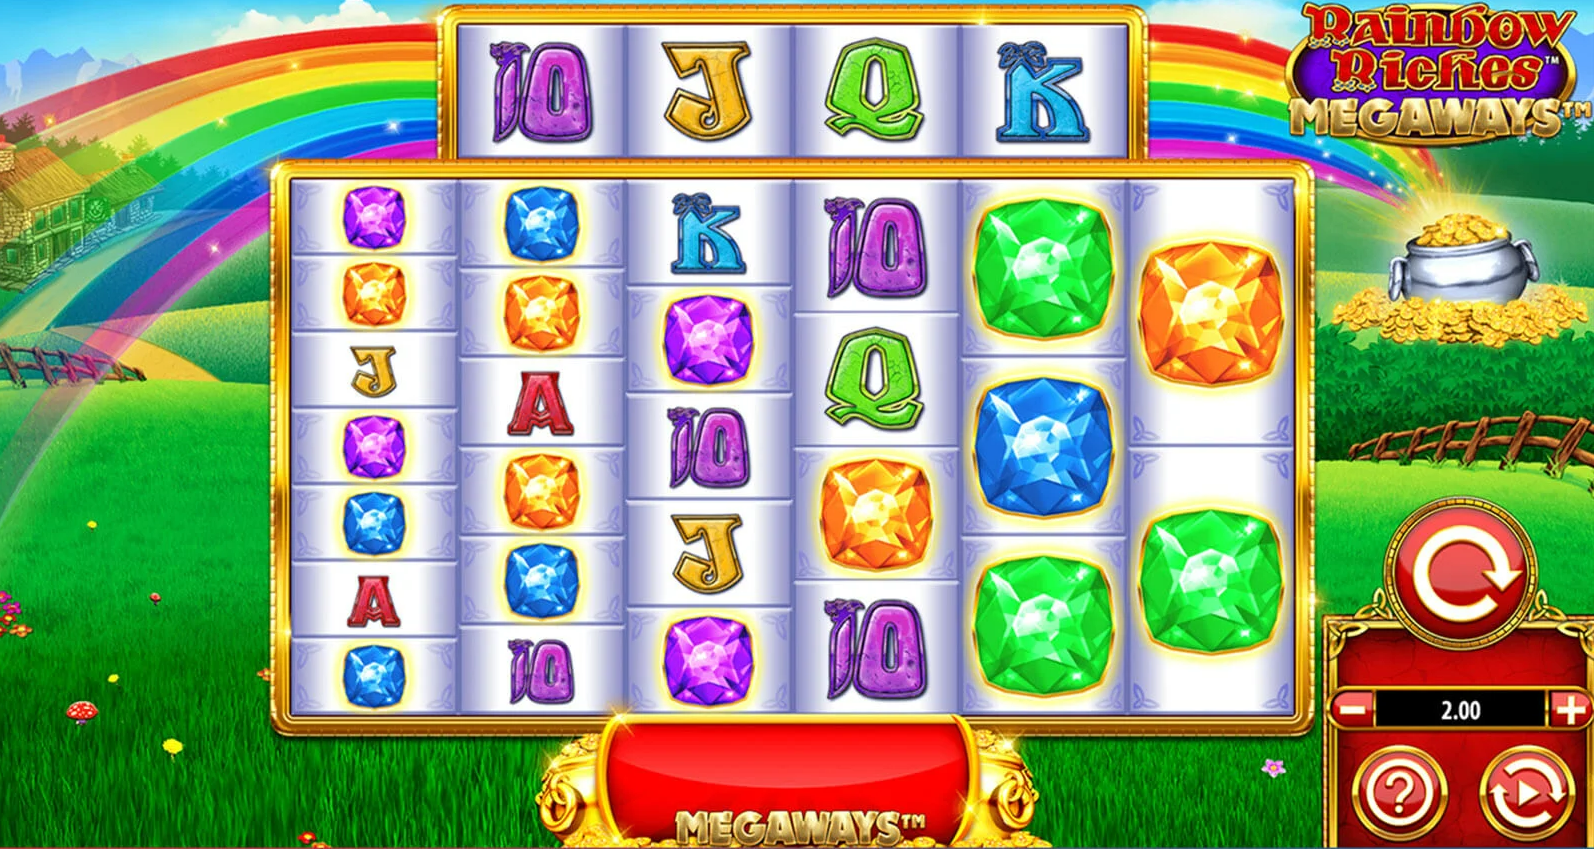 Rainbow Riches Megaways Slot Game